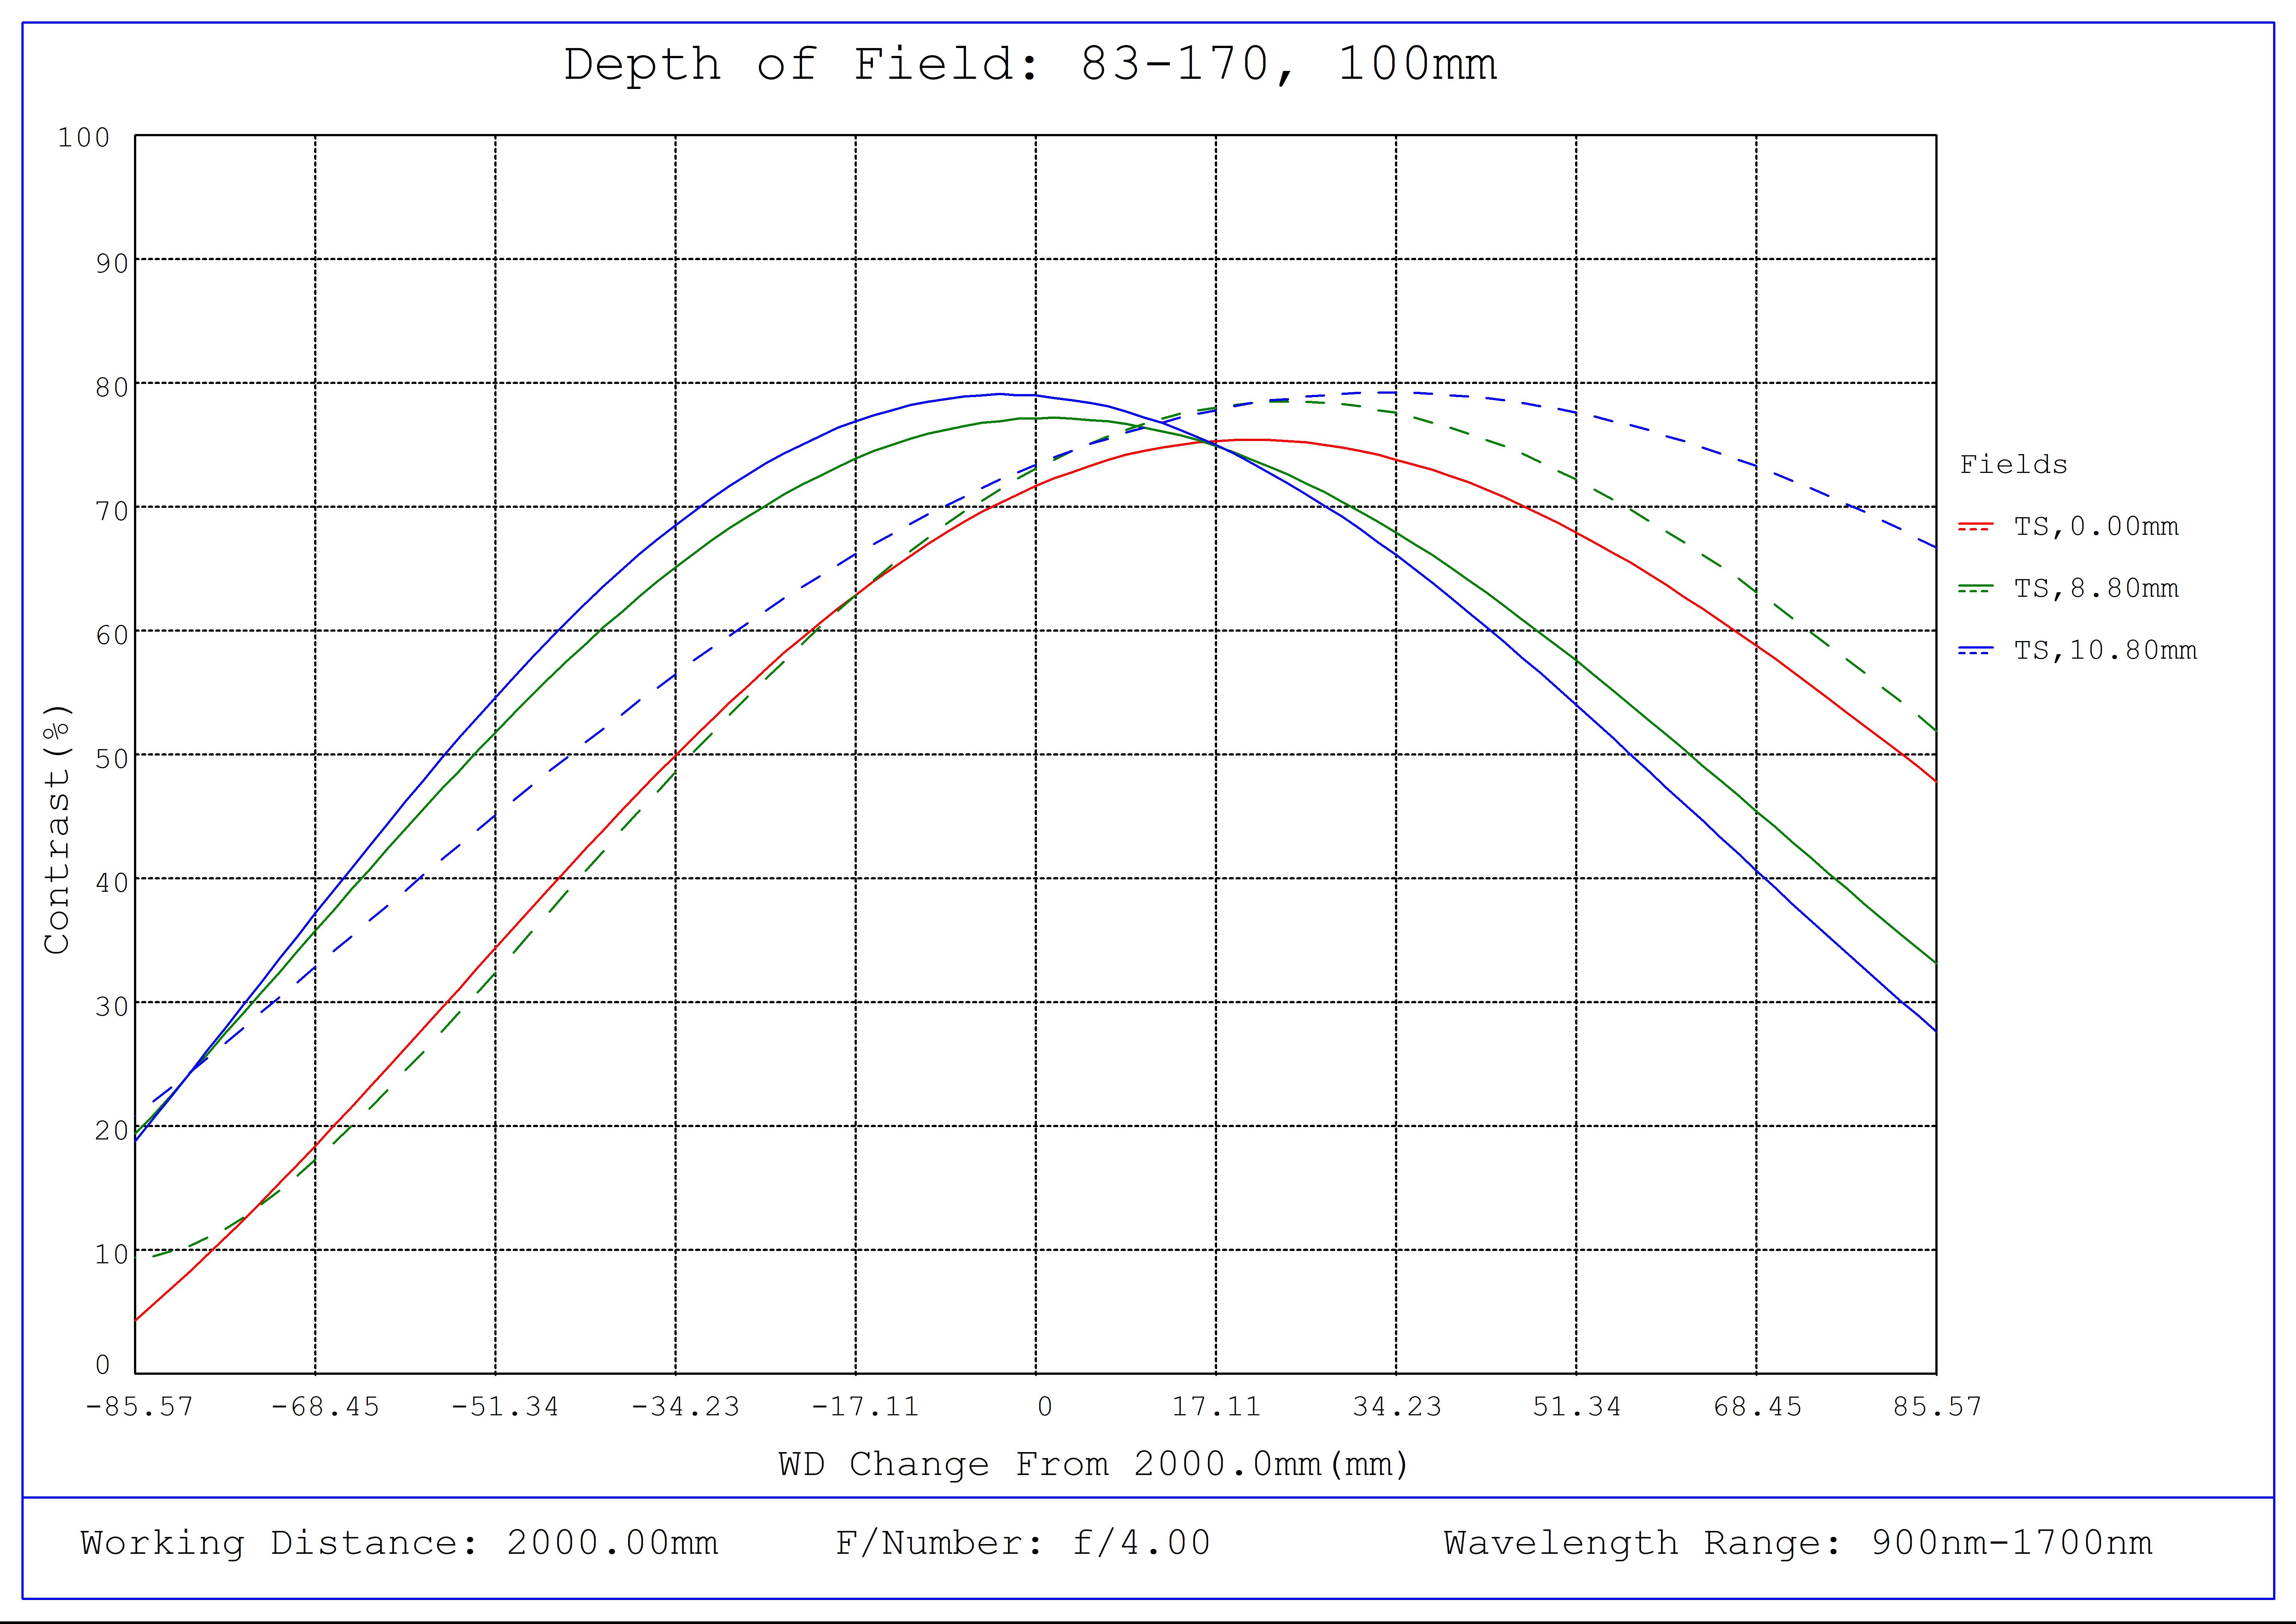 #83-170, 100mm SWIR Series Fixed Focal Length Lens, C-Mount, Depth of Field Plot, 2000mm Working Distance, f4